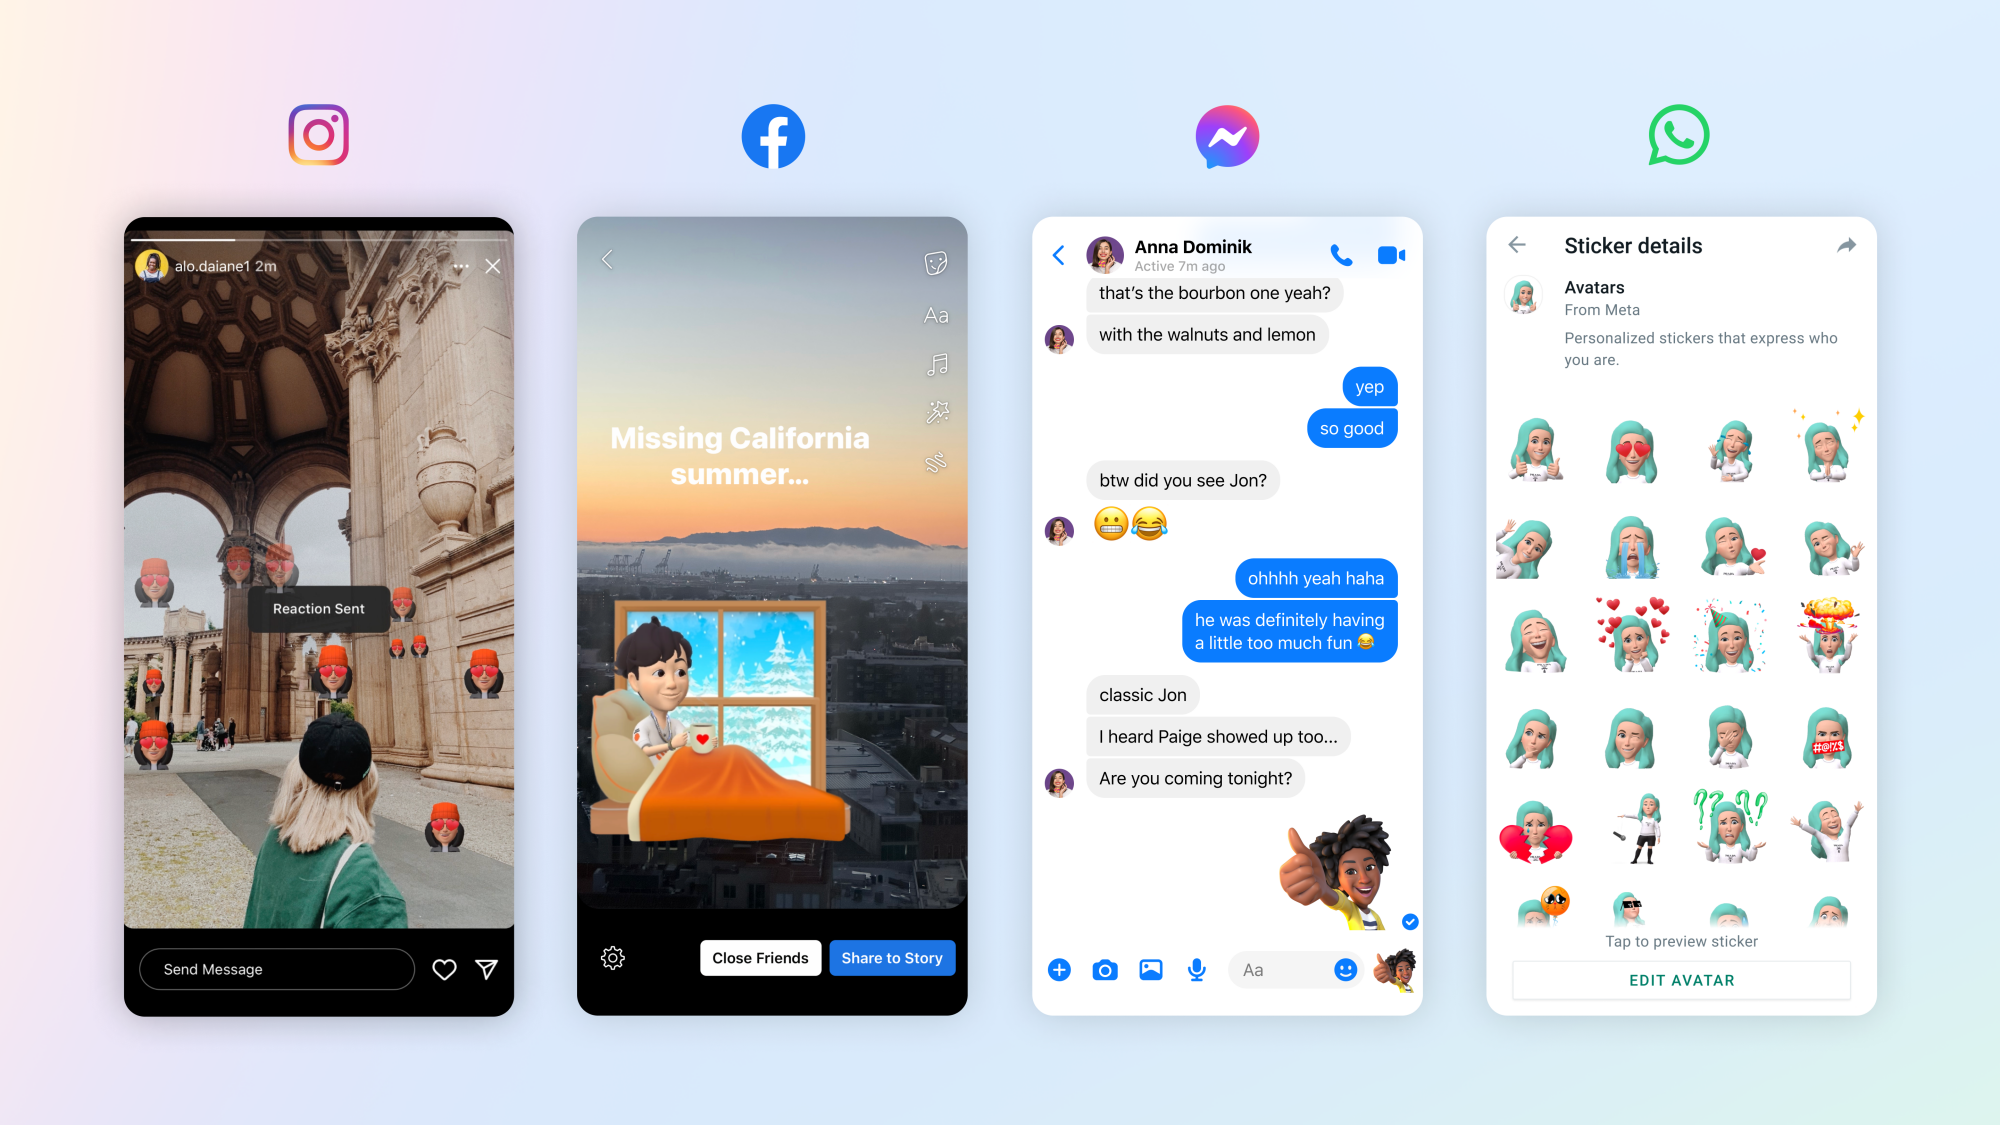 Four screenshots of apps using Meta avatars: Instagram, Facebook, Messenger, and WhatsApp.